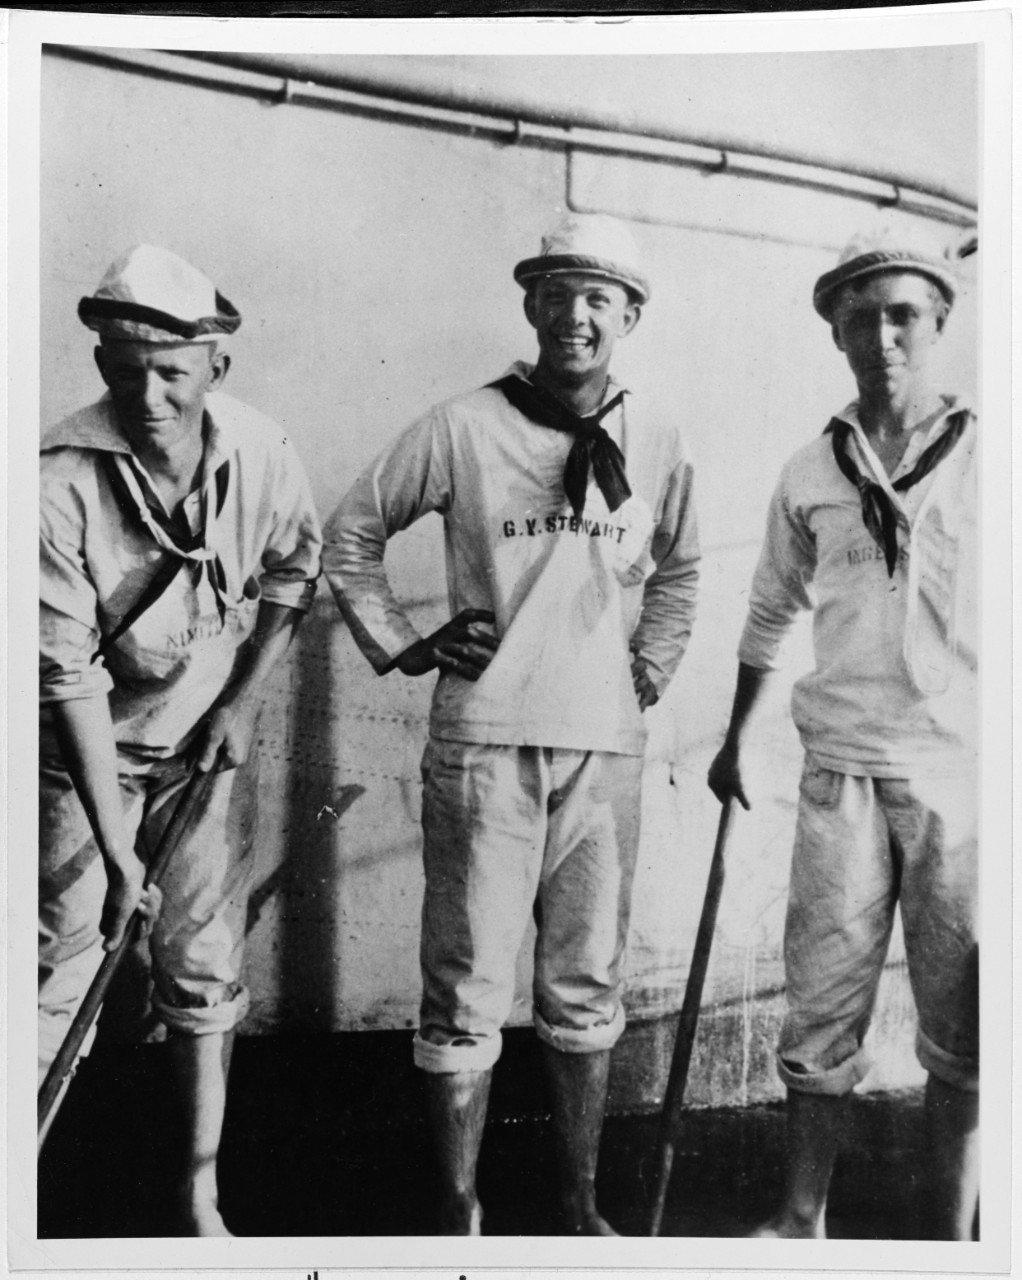 Midshipman Chester W. Nimitz, Midshipman G. V. Stewart and Midshipman Royal E. Ingersoll